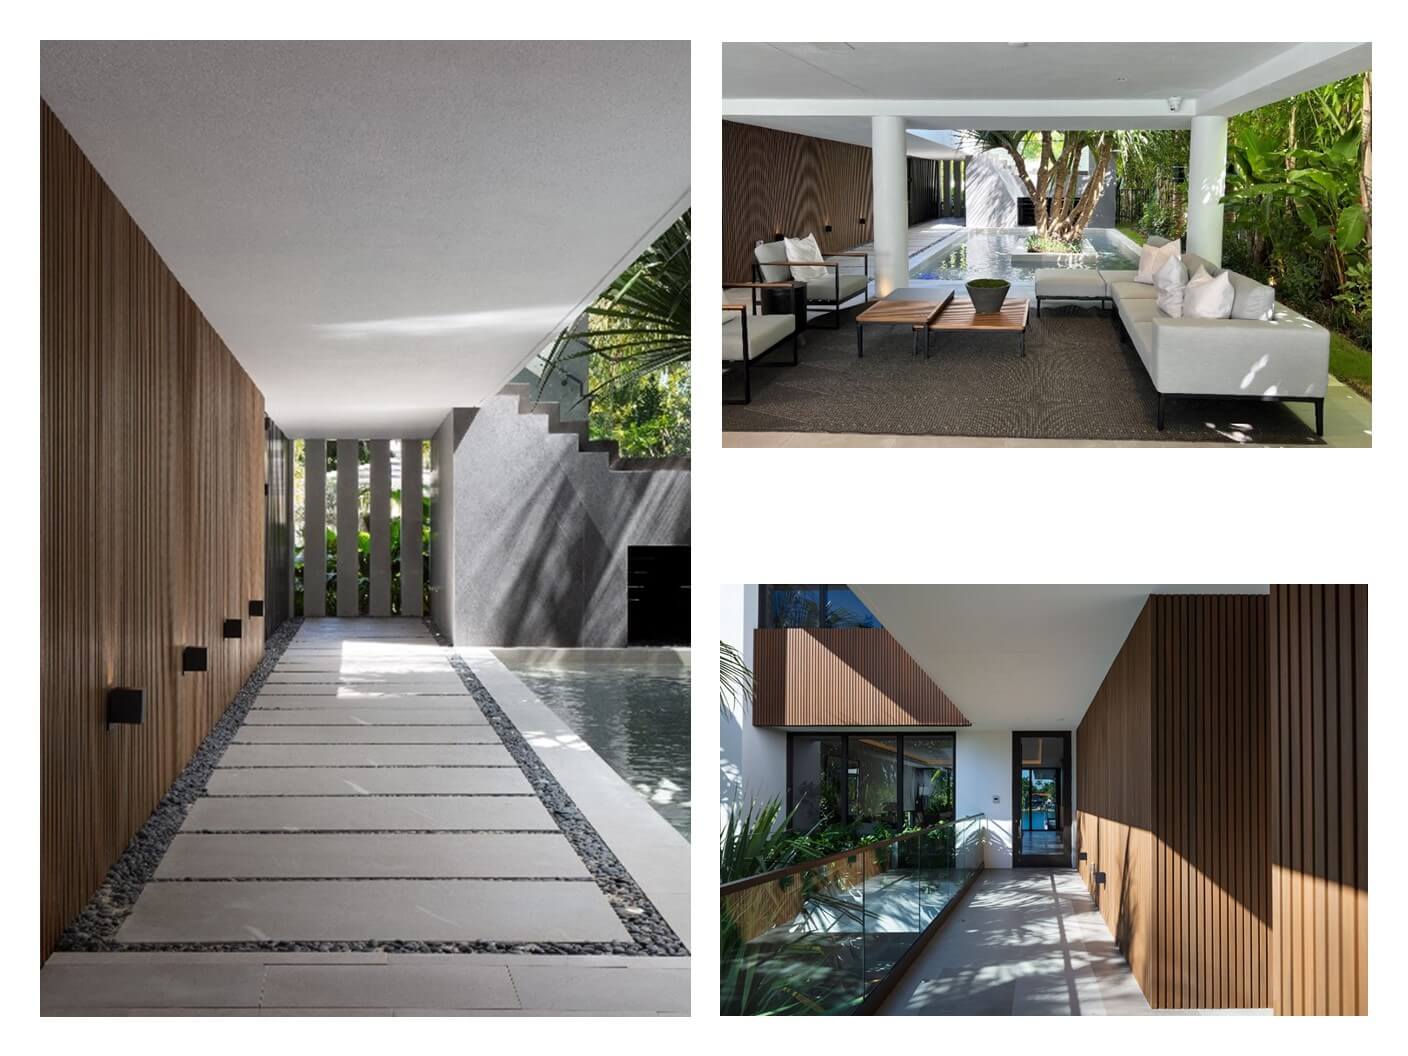 Abnormaal artikel Gezicht omhoog Praxis Architecture designs Casa Rivo Al|Houses